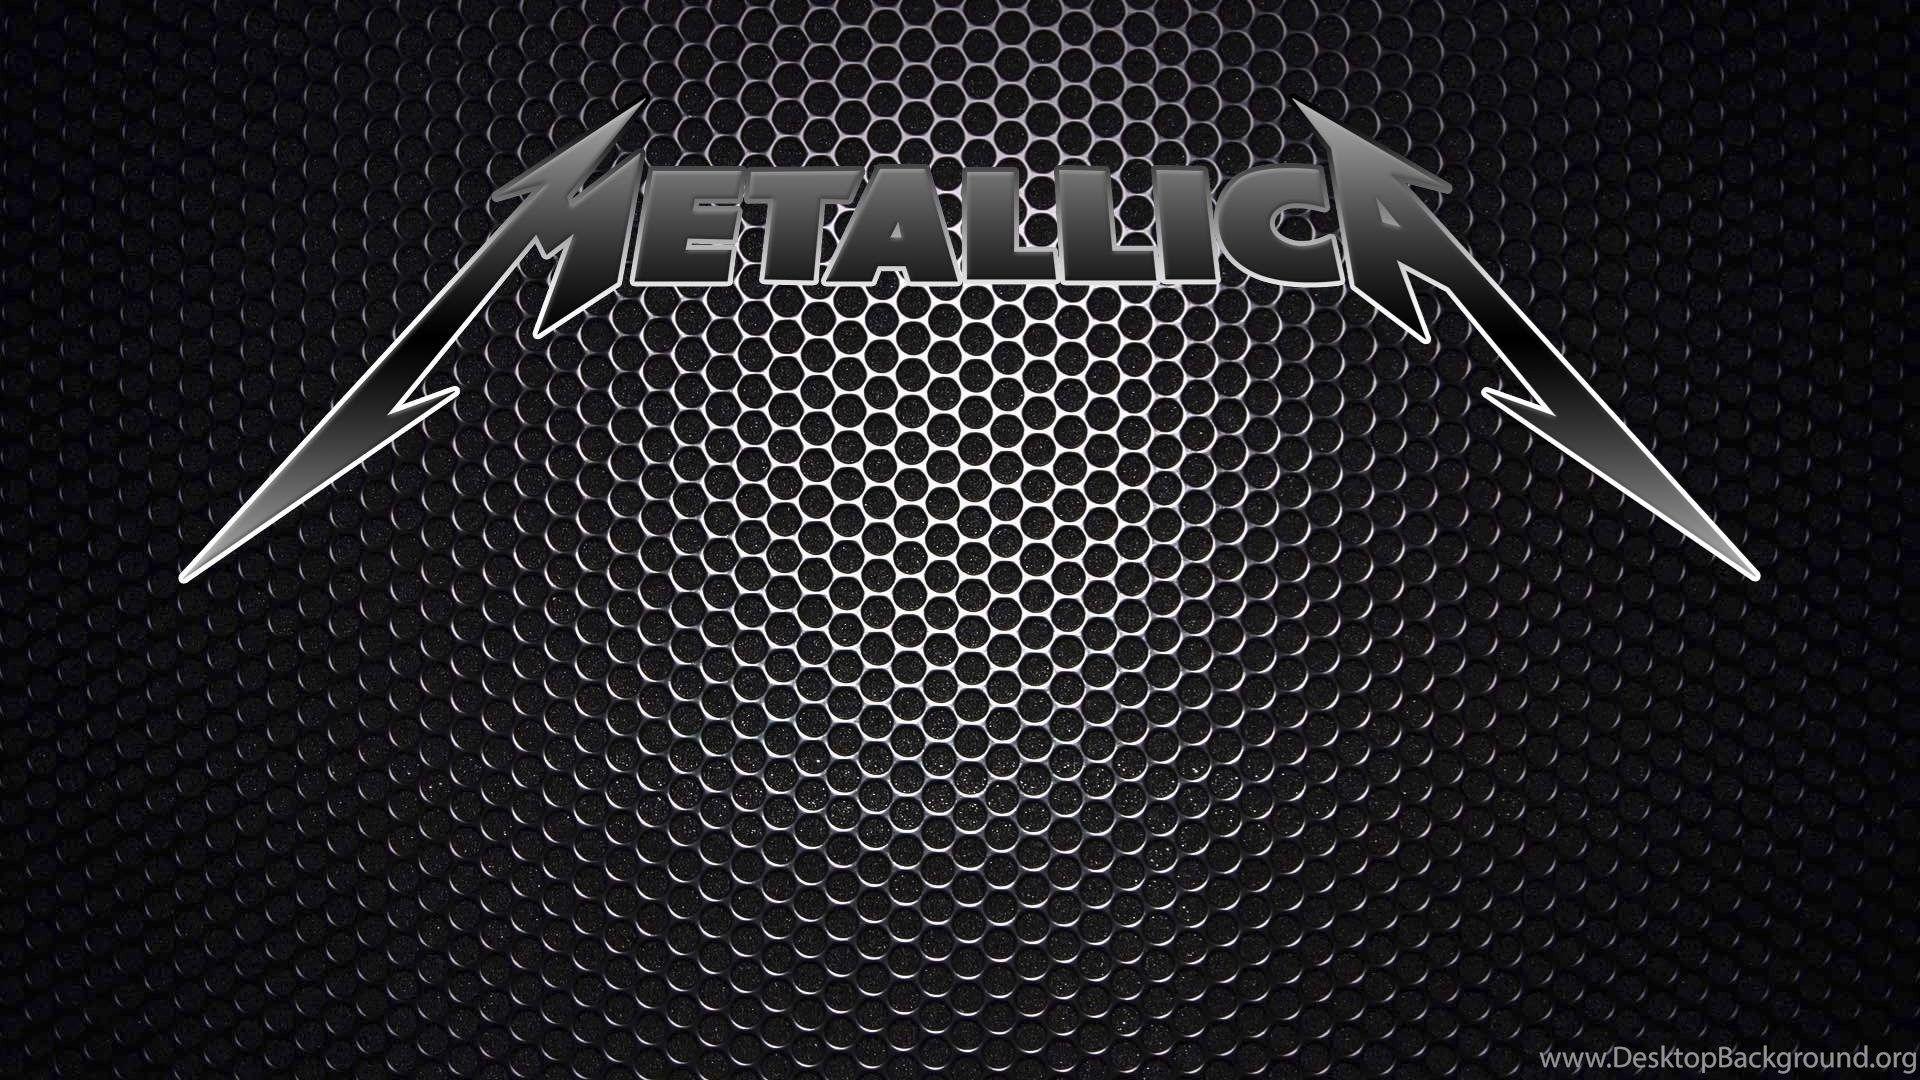 Metallica Wall